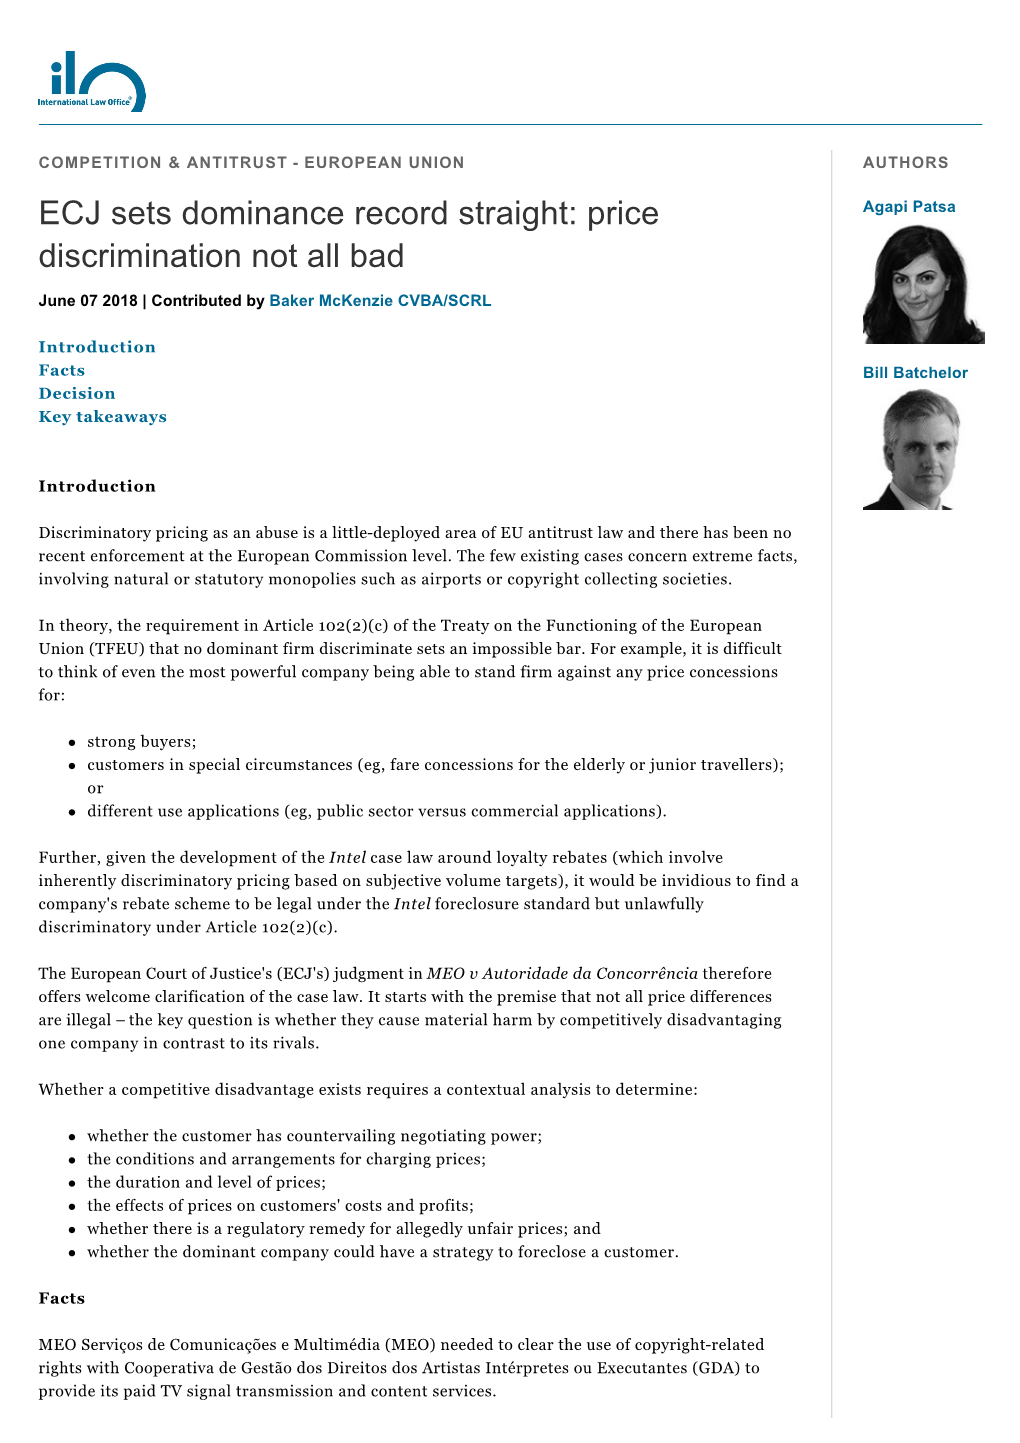 ECJ Sets Dominance Record Straight: Price Discrimination Not All